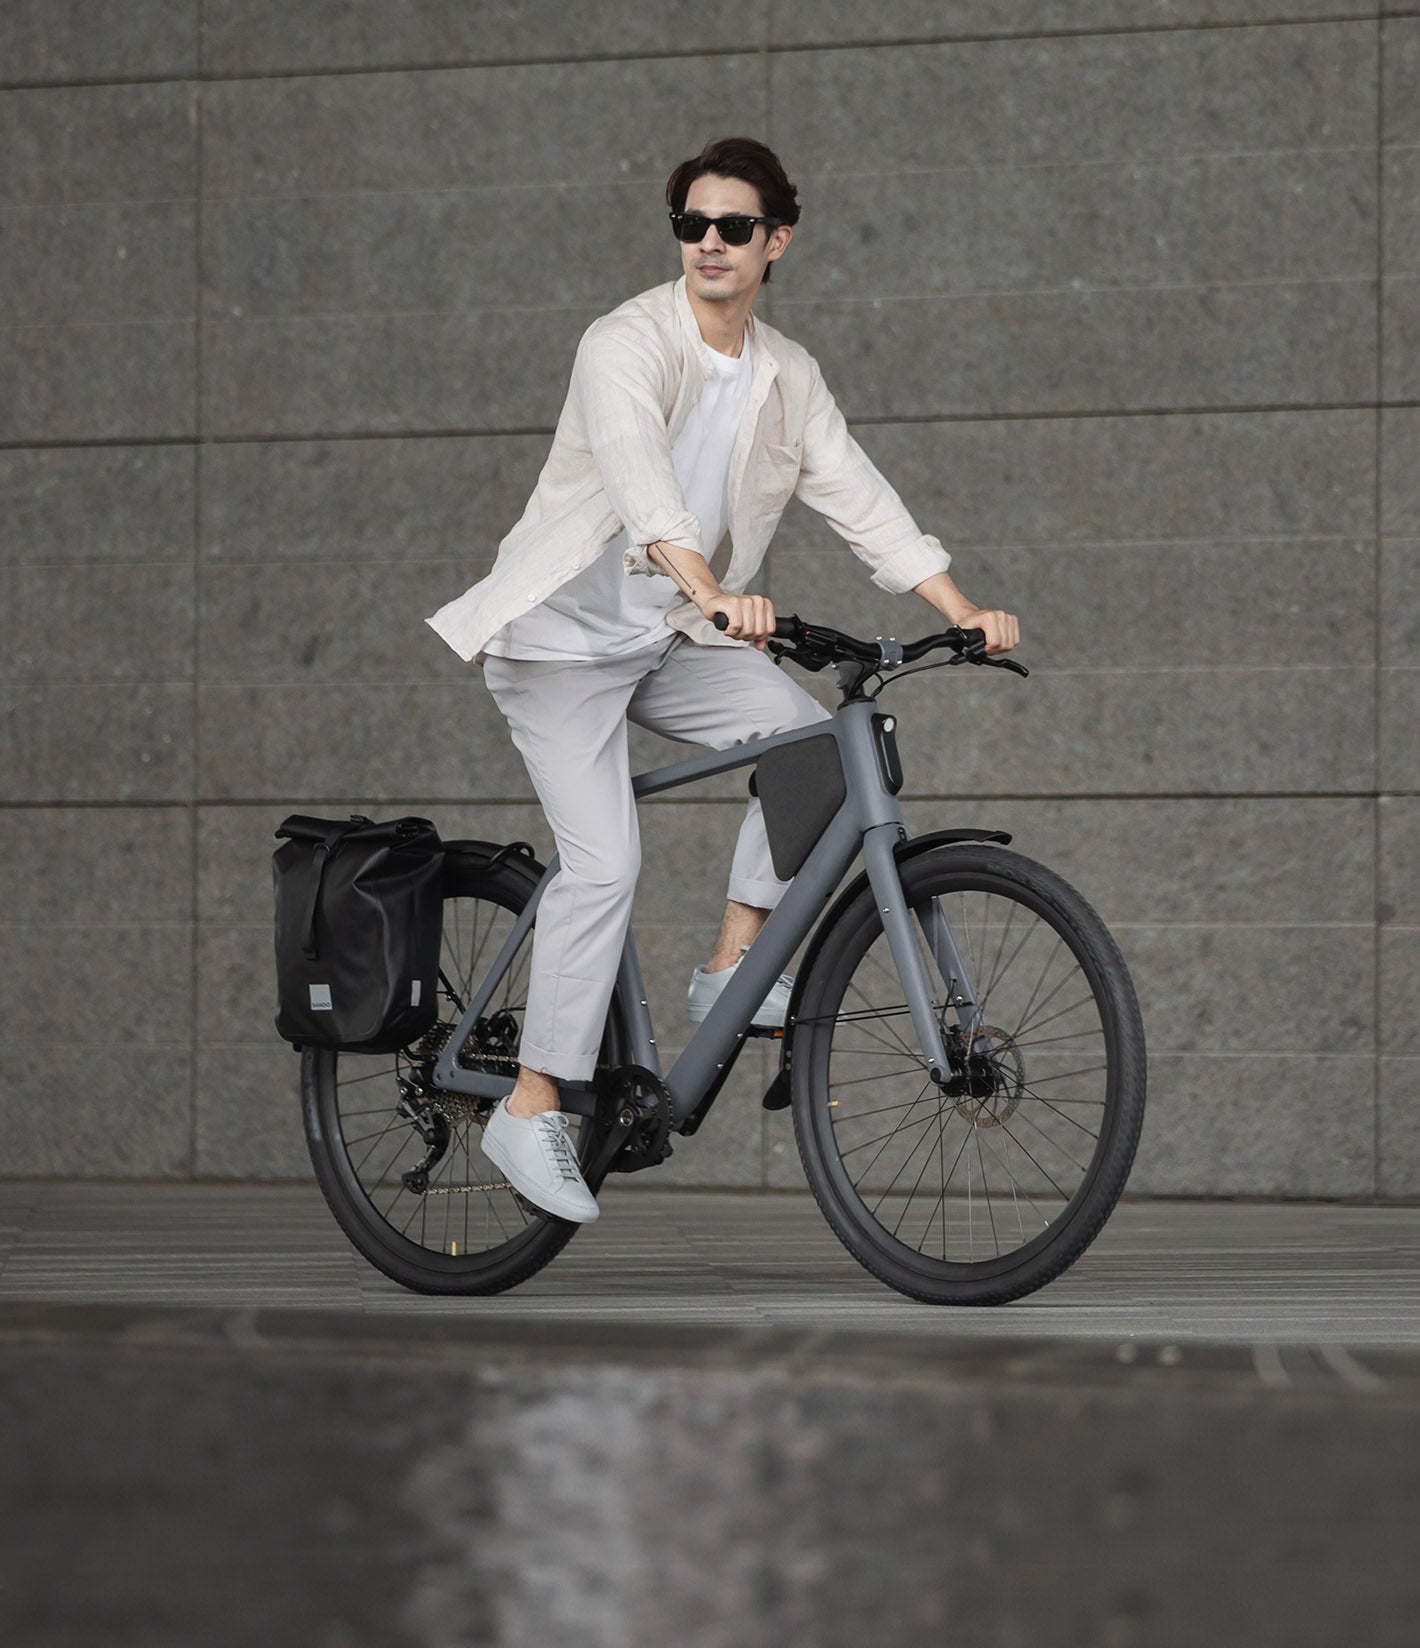 Mann fährt LEMMO urban e-bike mit Gepäckträger.